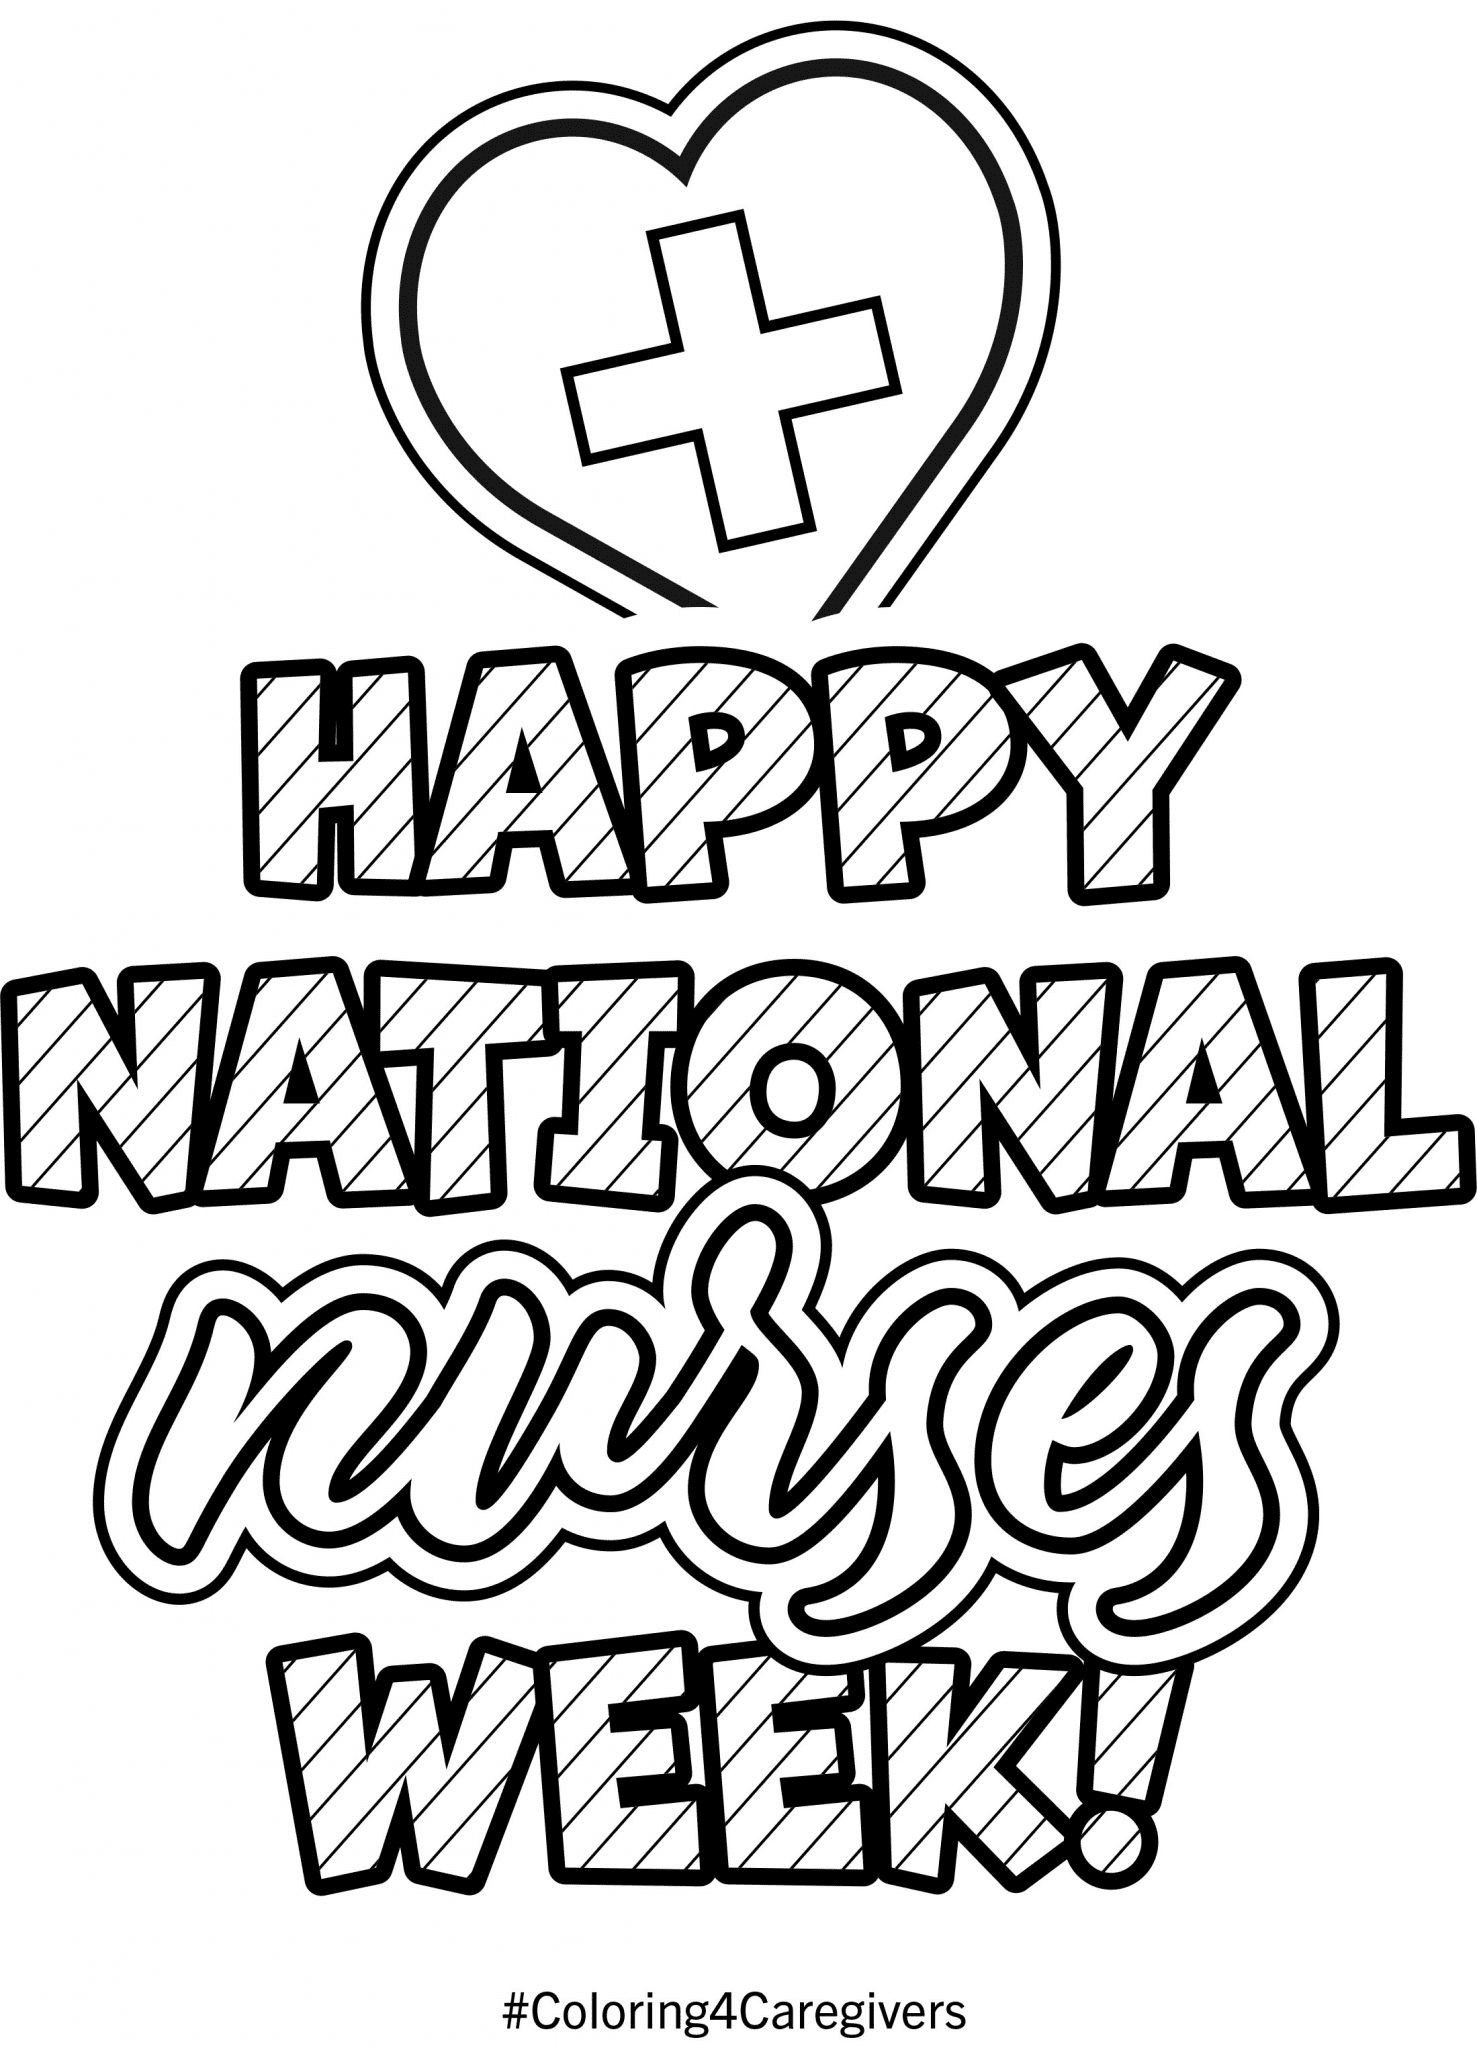 Happy National Nurses week Coloring Pages